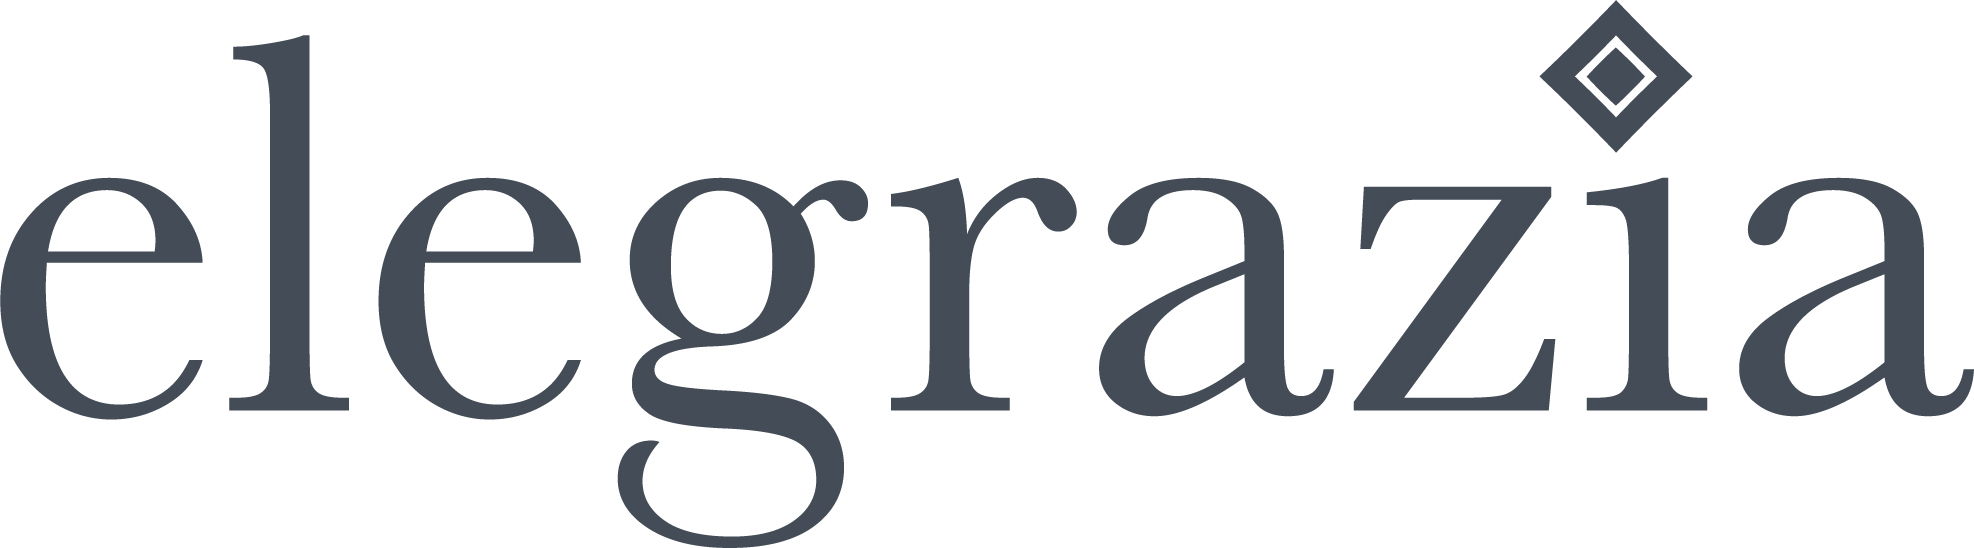 Elegrazia | Branding Identity | Graphic Design | Marketing Strategy